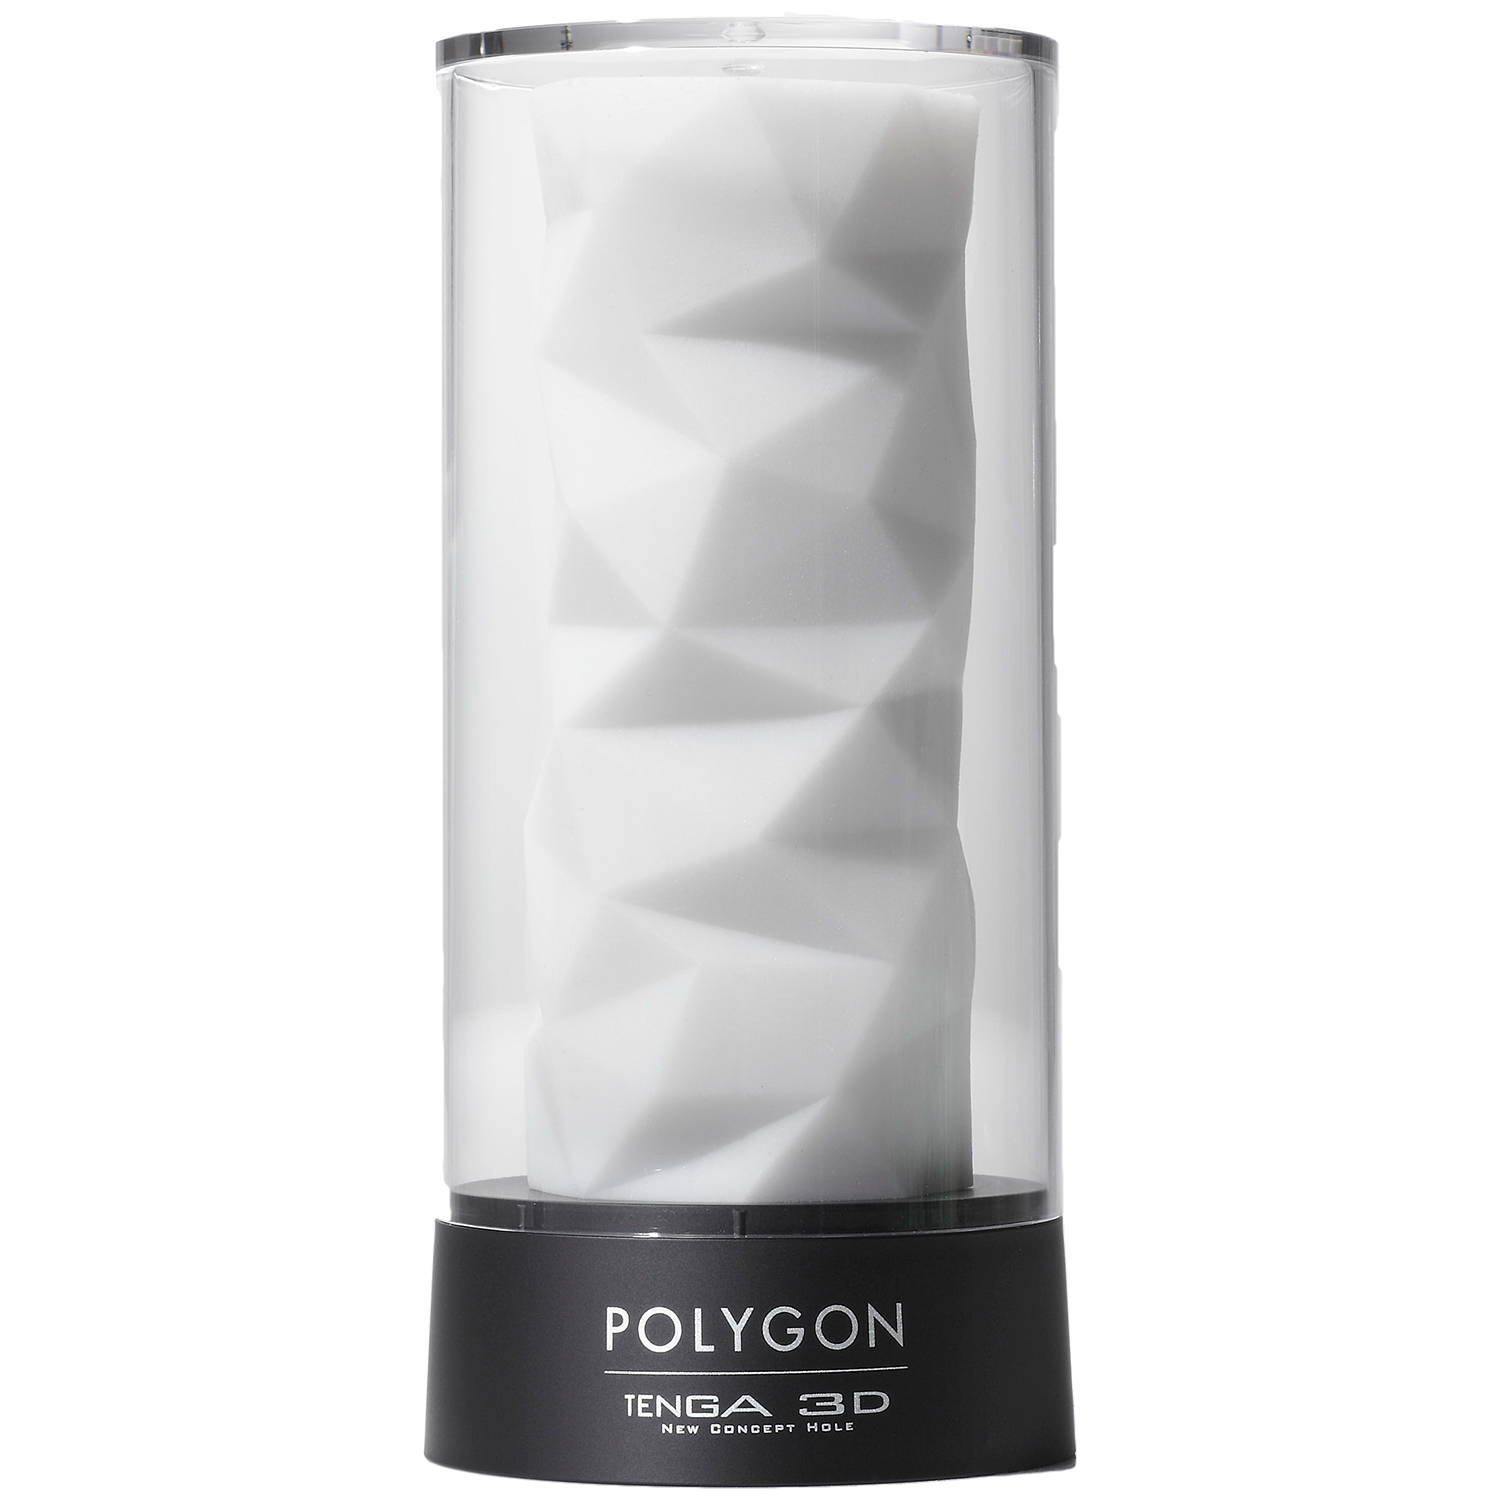 Tenga 3D Polygon Masturbateur - Blanc